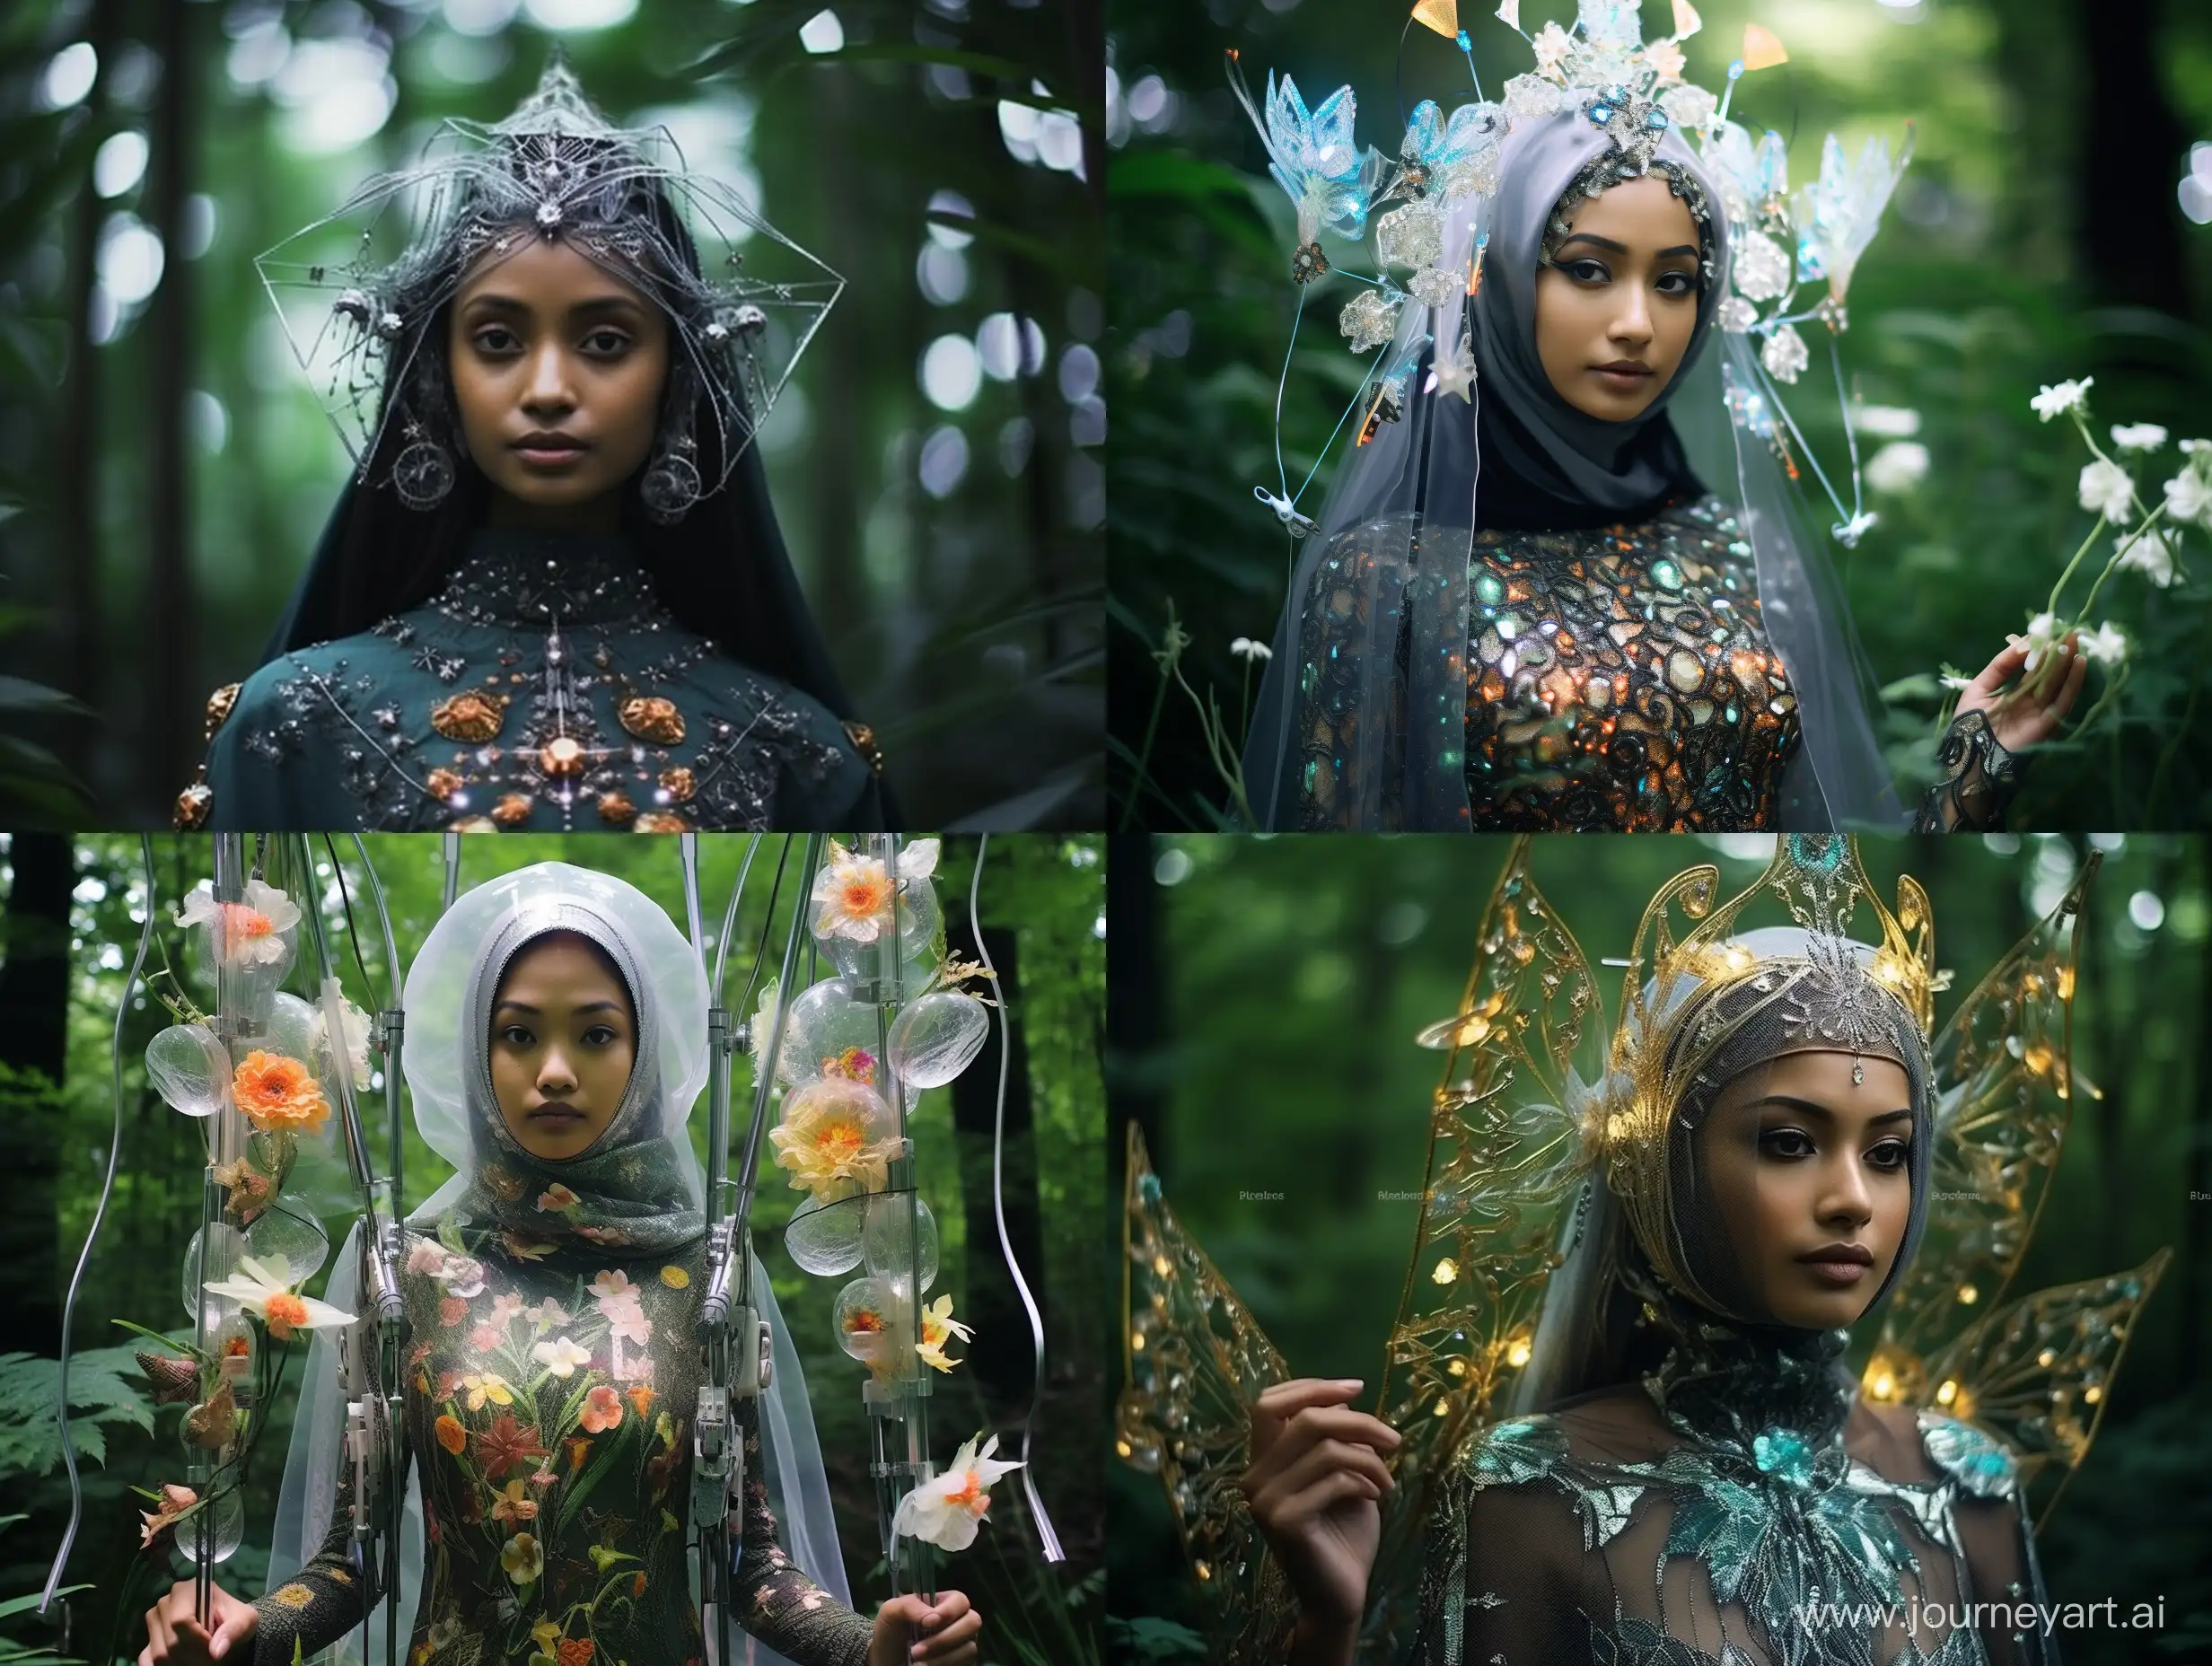 Futuristic-Indonesian-Princess-in-Cybernetic-Attire-Amidst-Neon-Butterflies